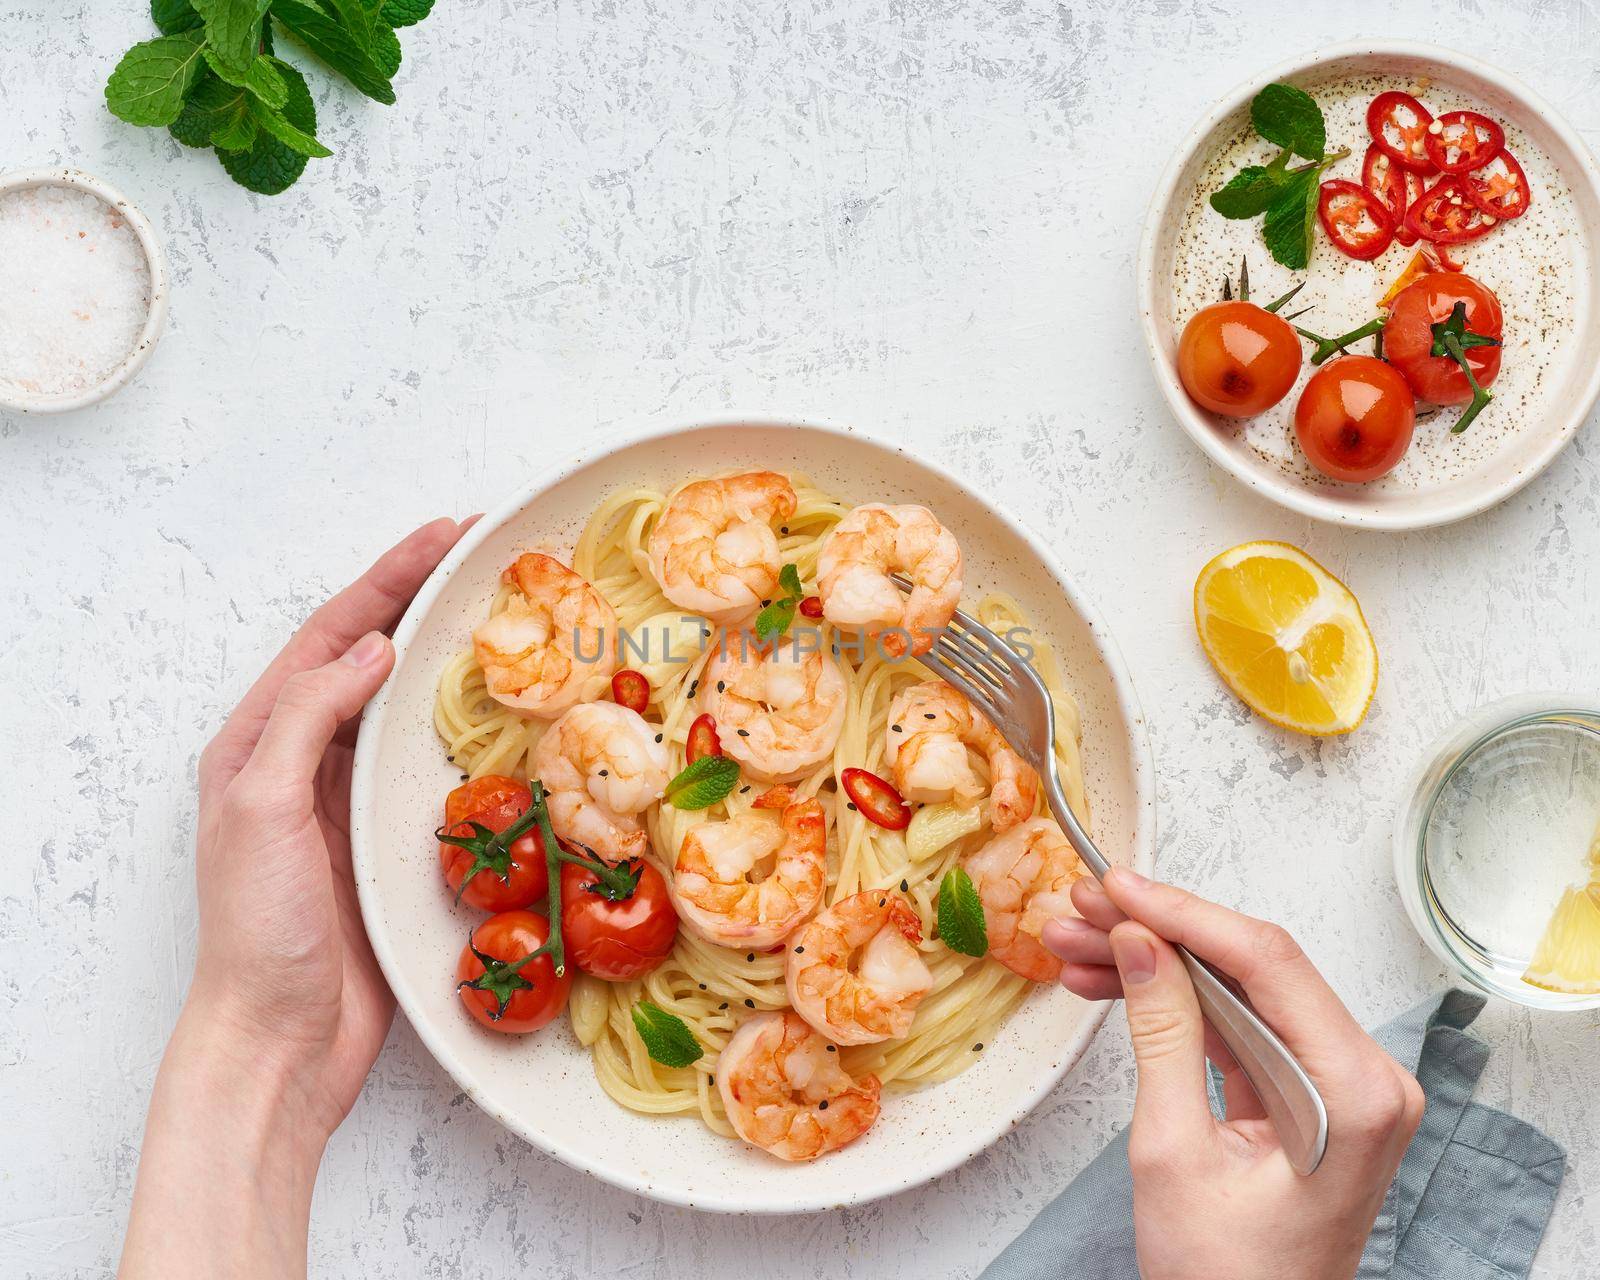 Pasta bavette with fried shrimps, bechamel sauce. Woman hands in frame, girl eats pasta, holds fork in hands, top view, italian cuisine.